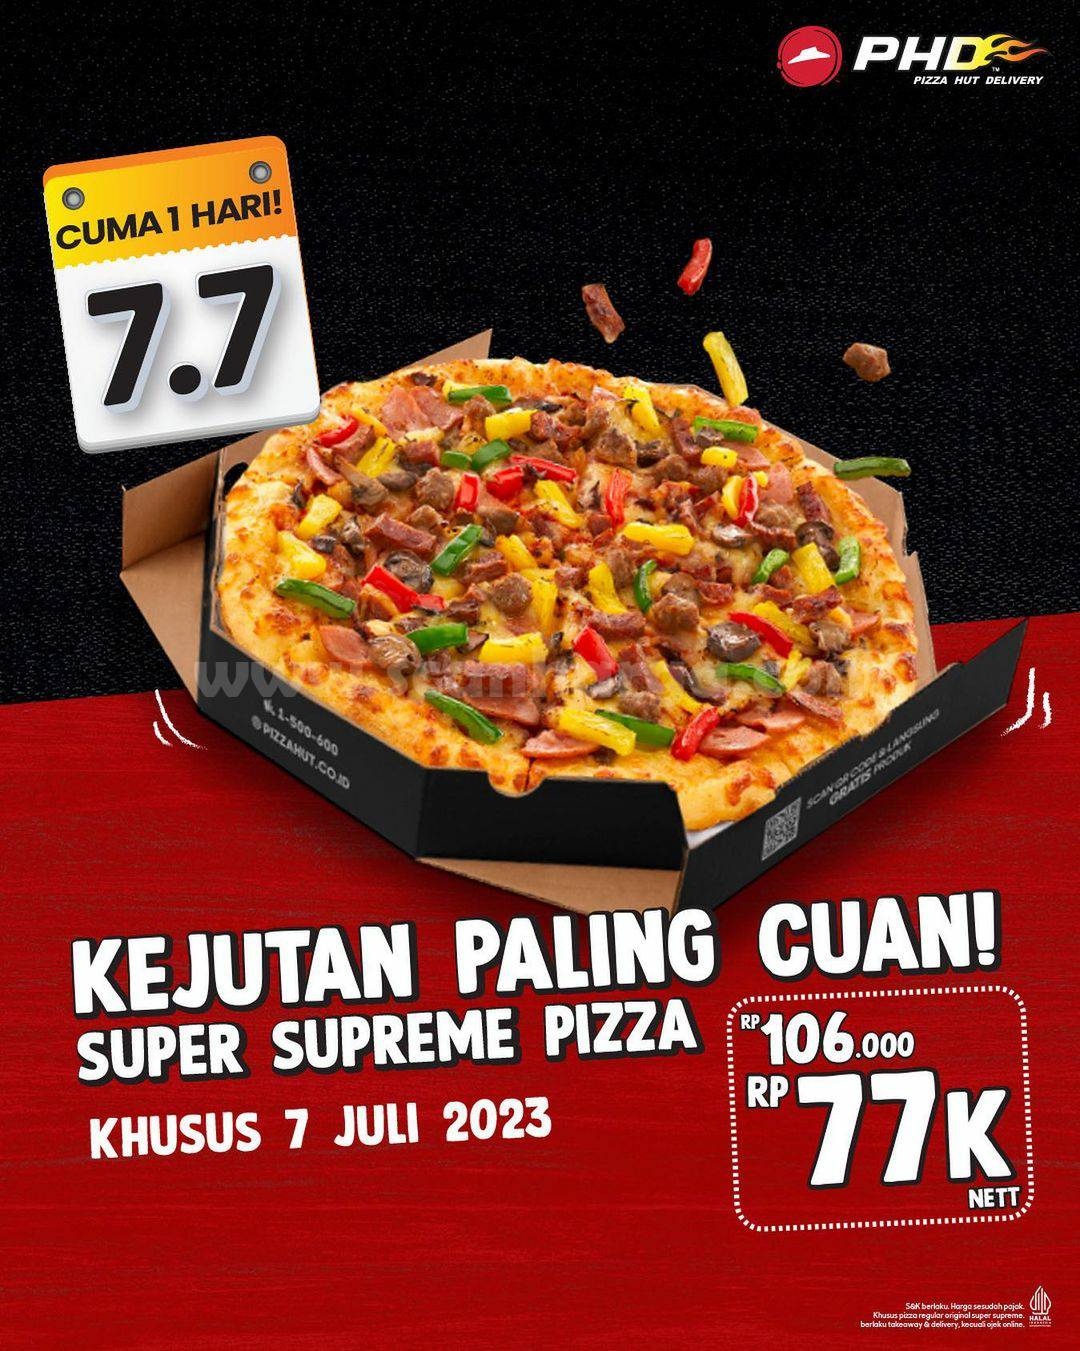 Promo PHD 7.7 – Harga Spesial Super Supreme Pizza Cuma Rp. 77.000